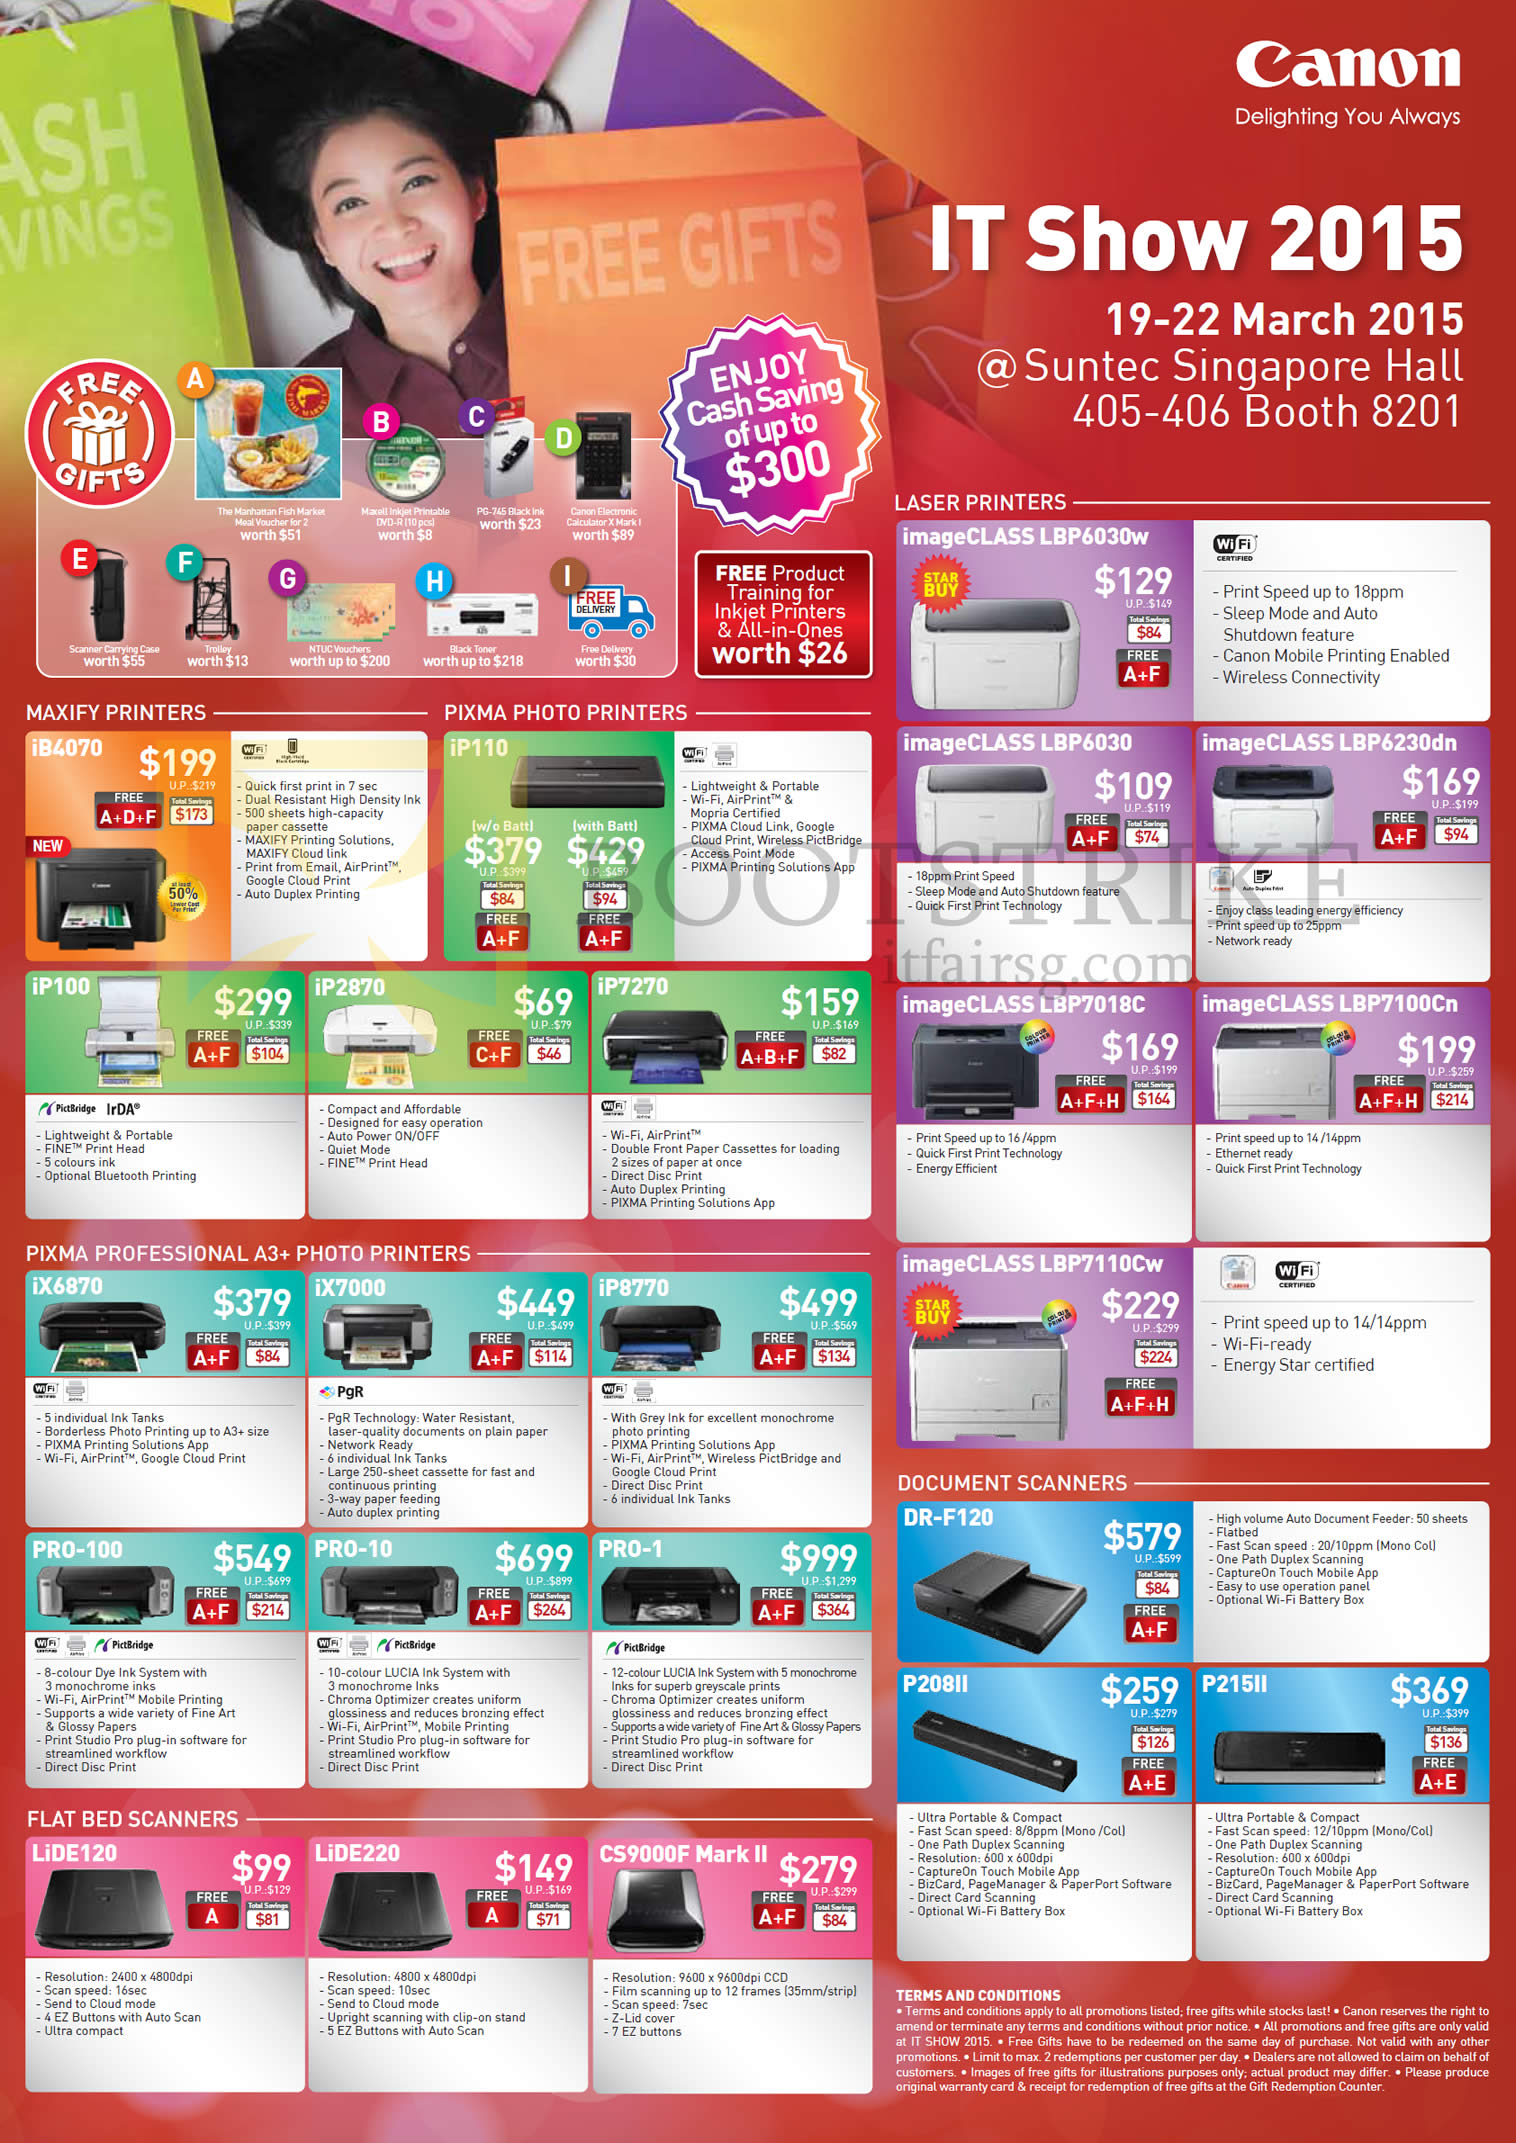 IT SHOW 2015 price list image brochure of Canon Printers Laser LBP6030w 6030 6230dn 7018C 7110Cw, Scanners, DR-F120, P215II, Maxify IB4070, Pixma IP110 2870 7270, IX6870 IP8770, PRO-100, Scanners, Lide 120, 220, CS9000F